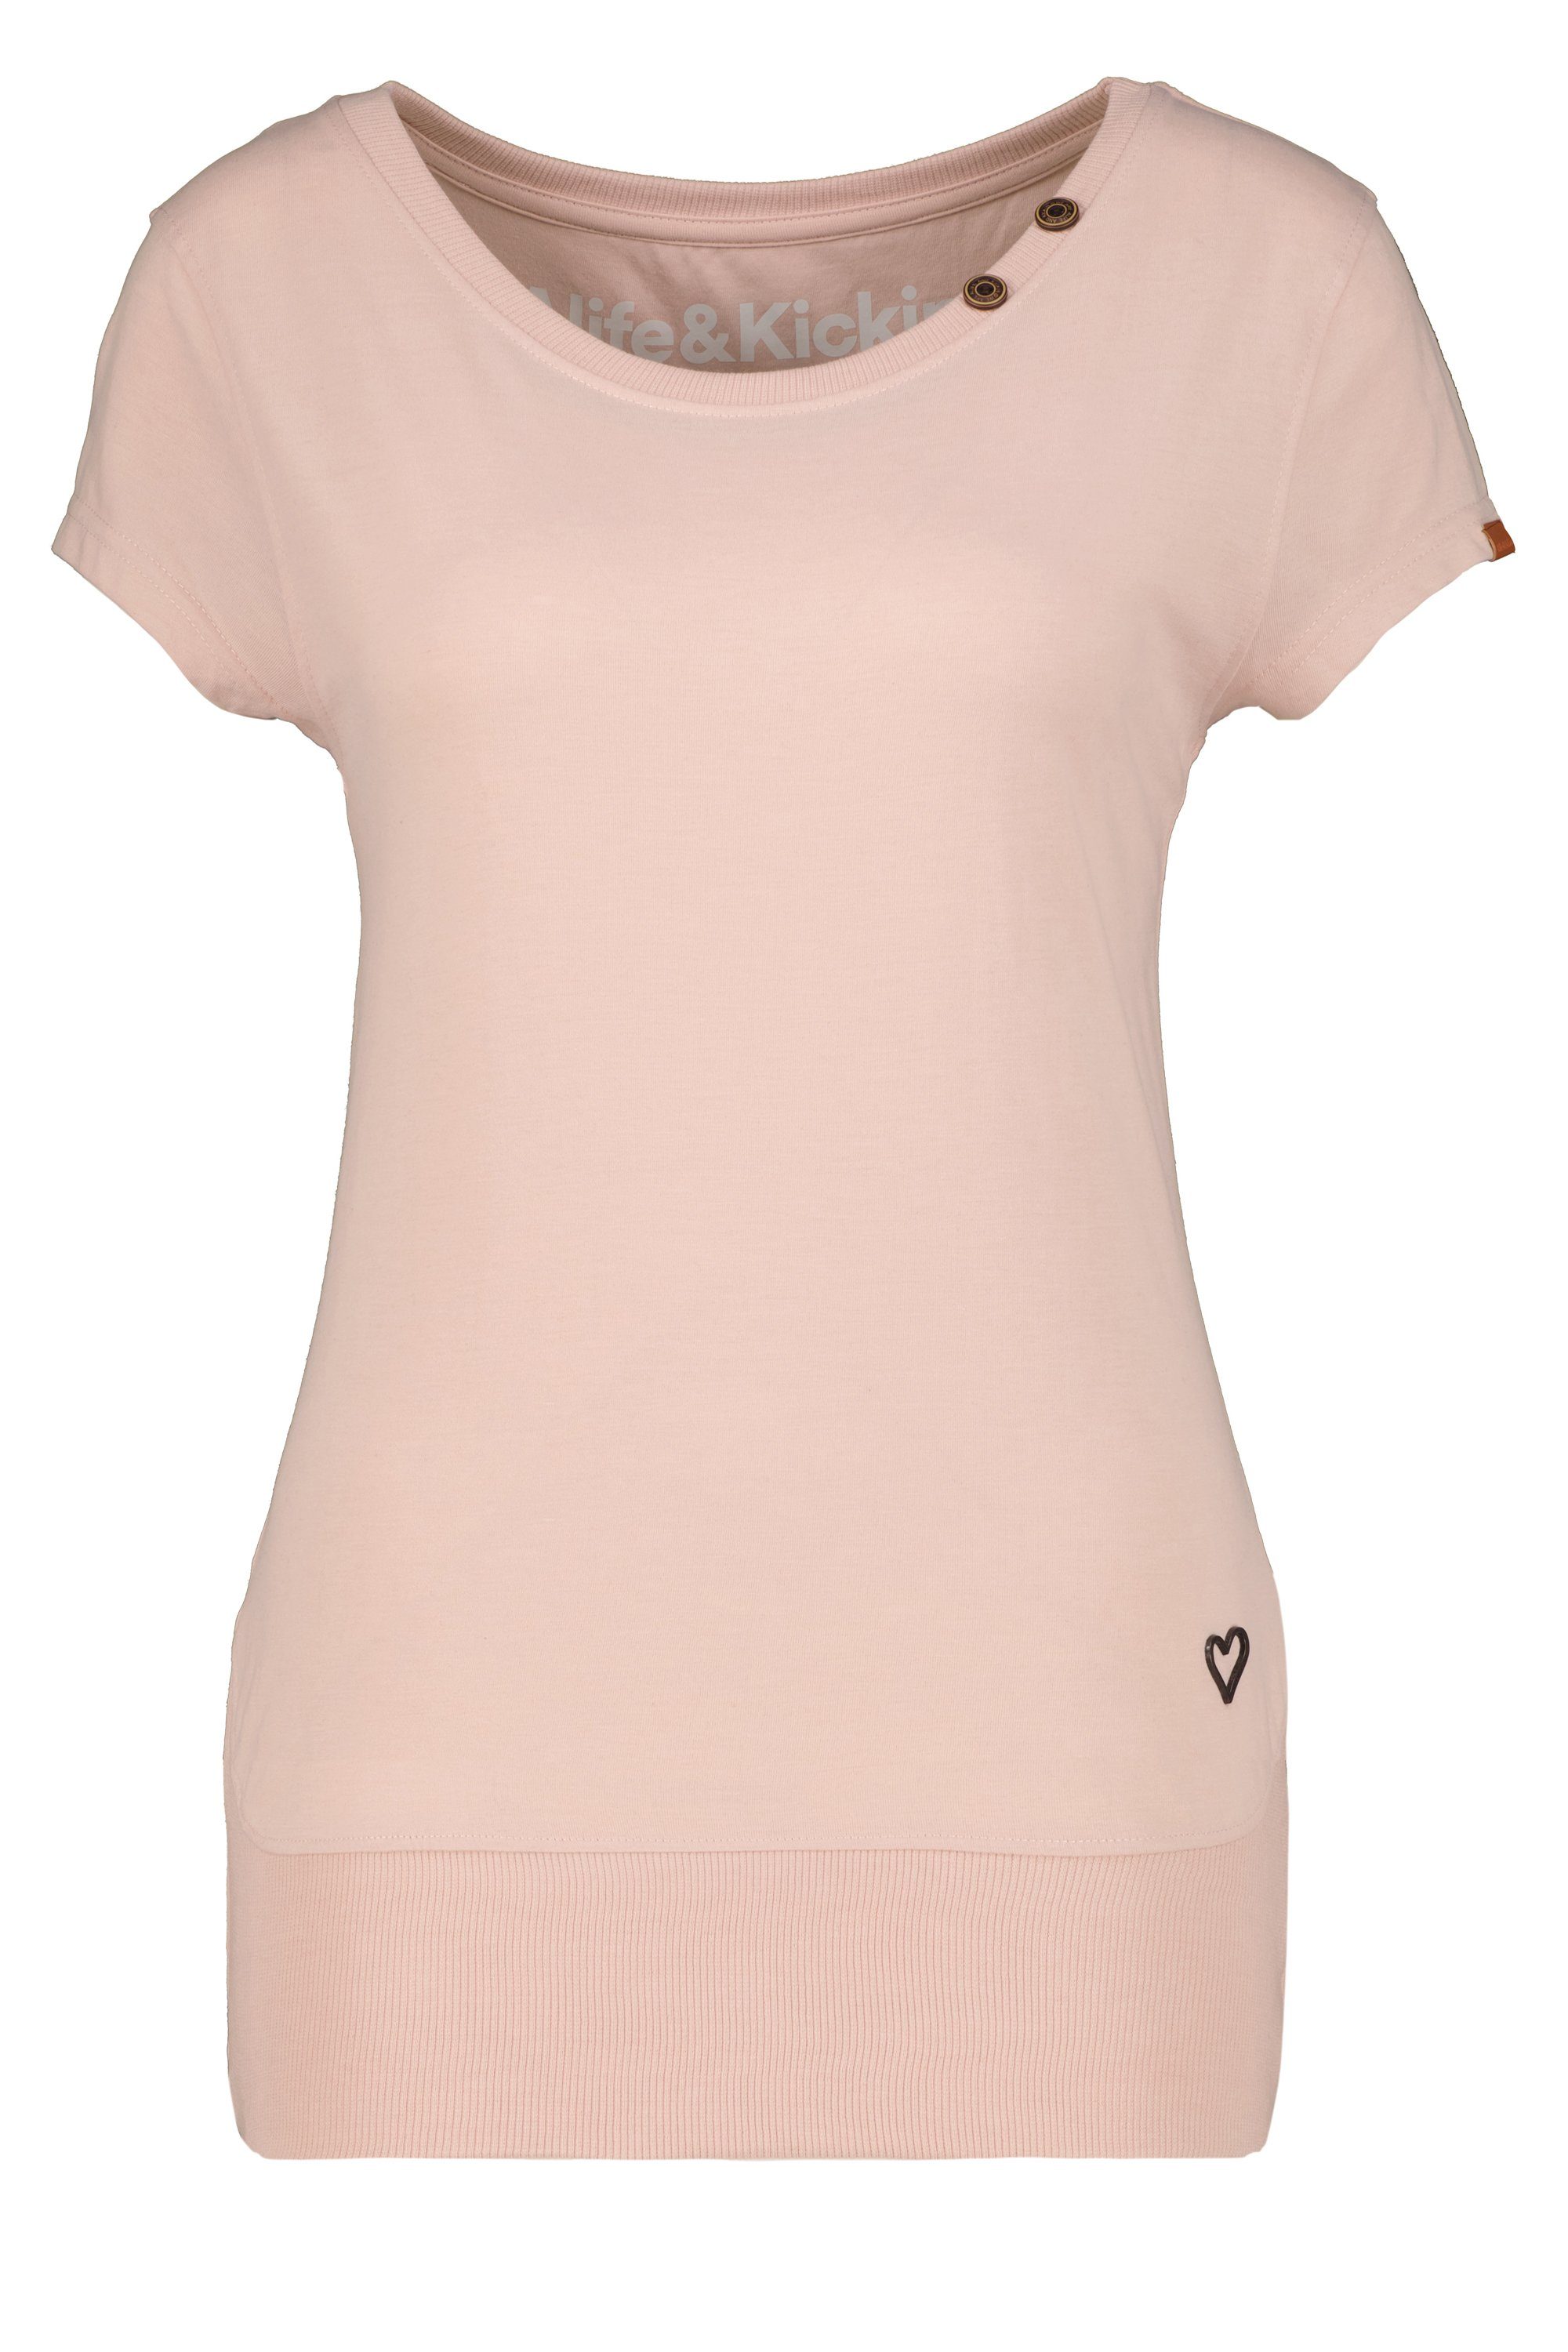 CocoAK Shirt T-Shirt blossom Damen Alife & T-Shirt A melange Kickin